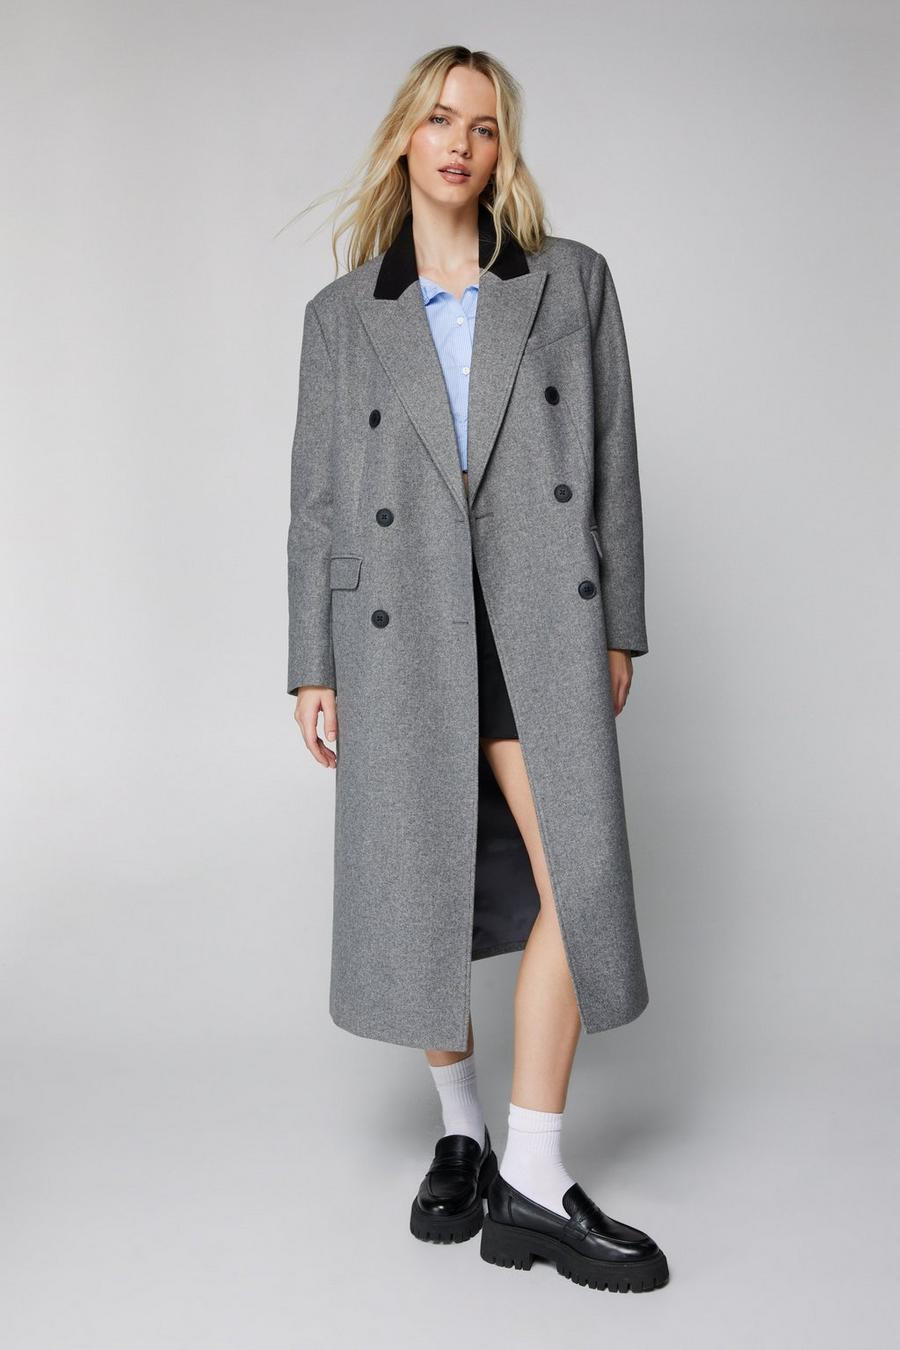 Grey marl Contrast Collar Wool Look Tailored Coat